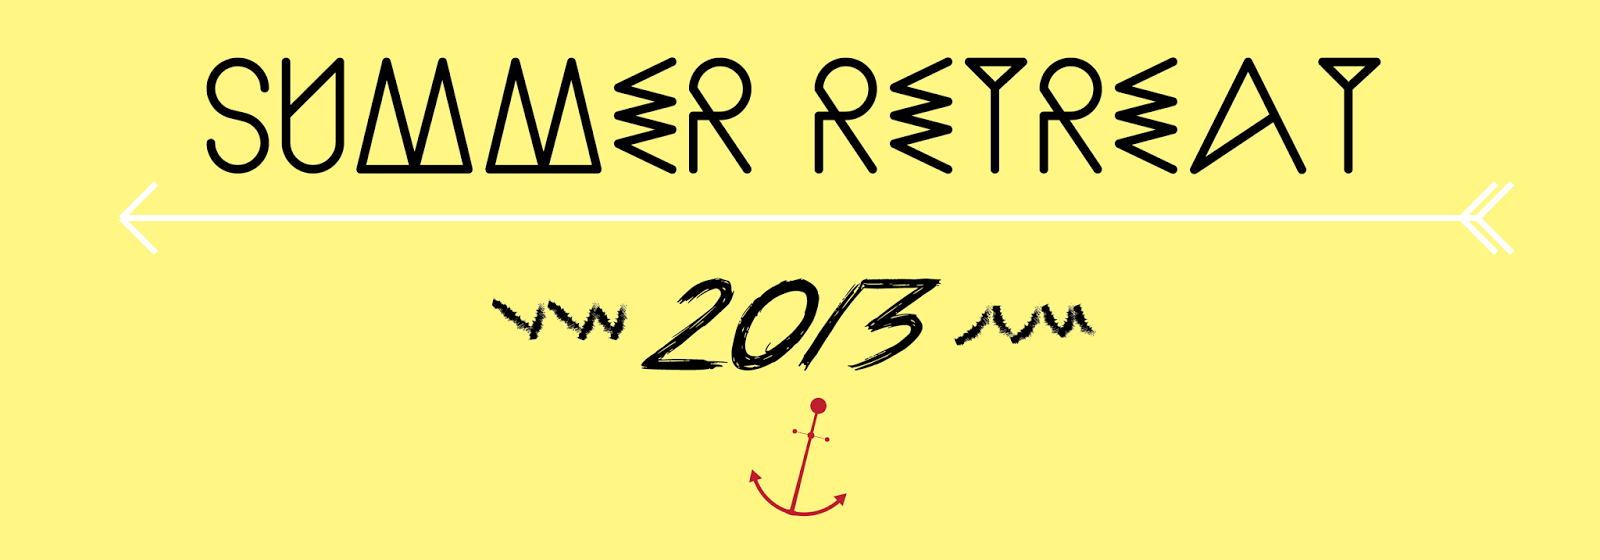 Summer-Retreat-e1375130896975